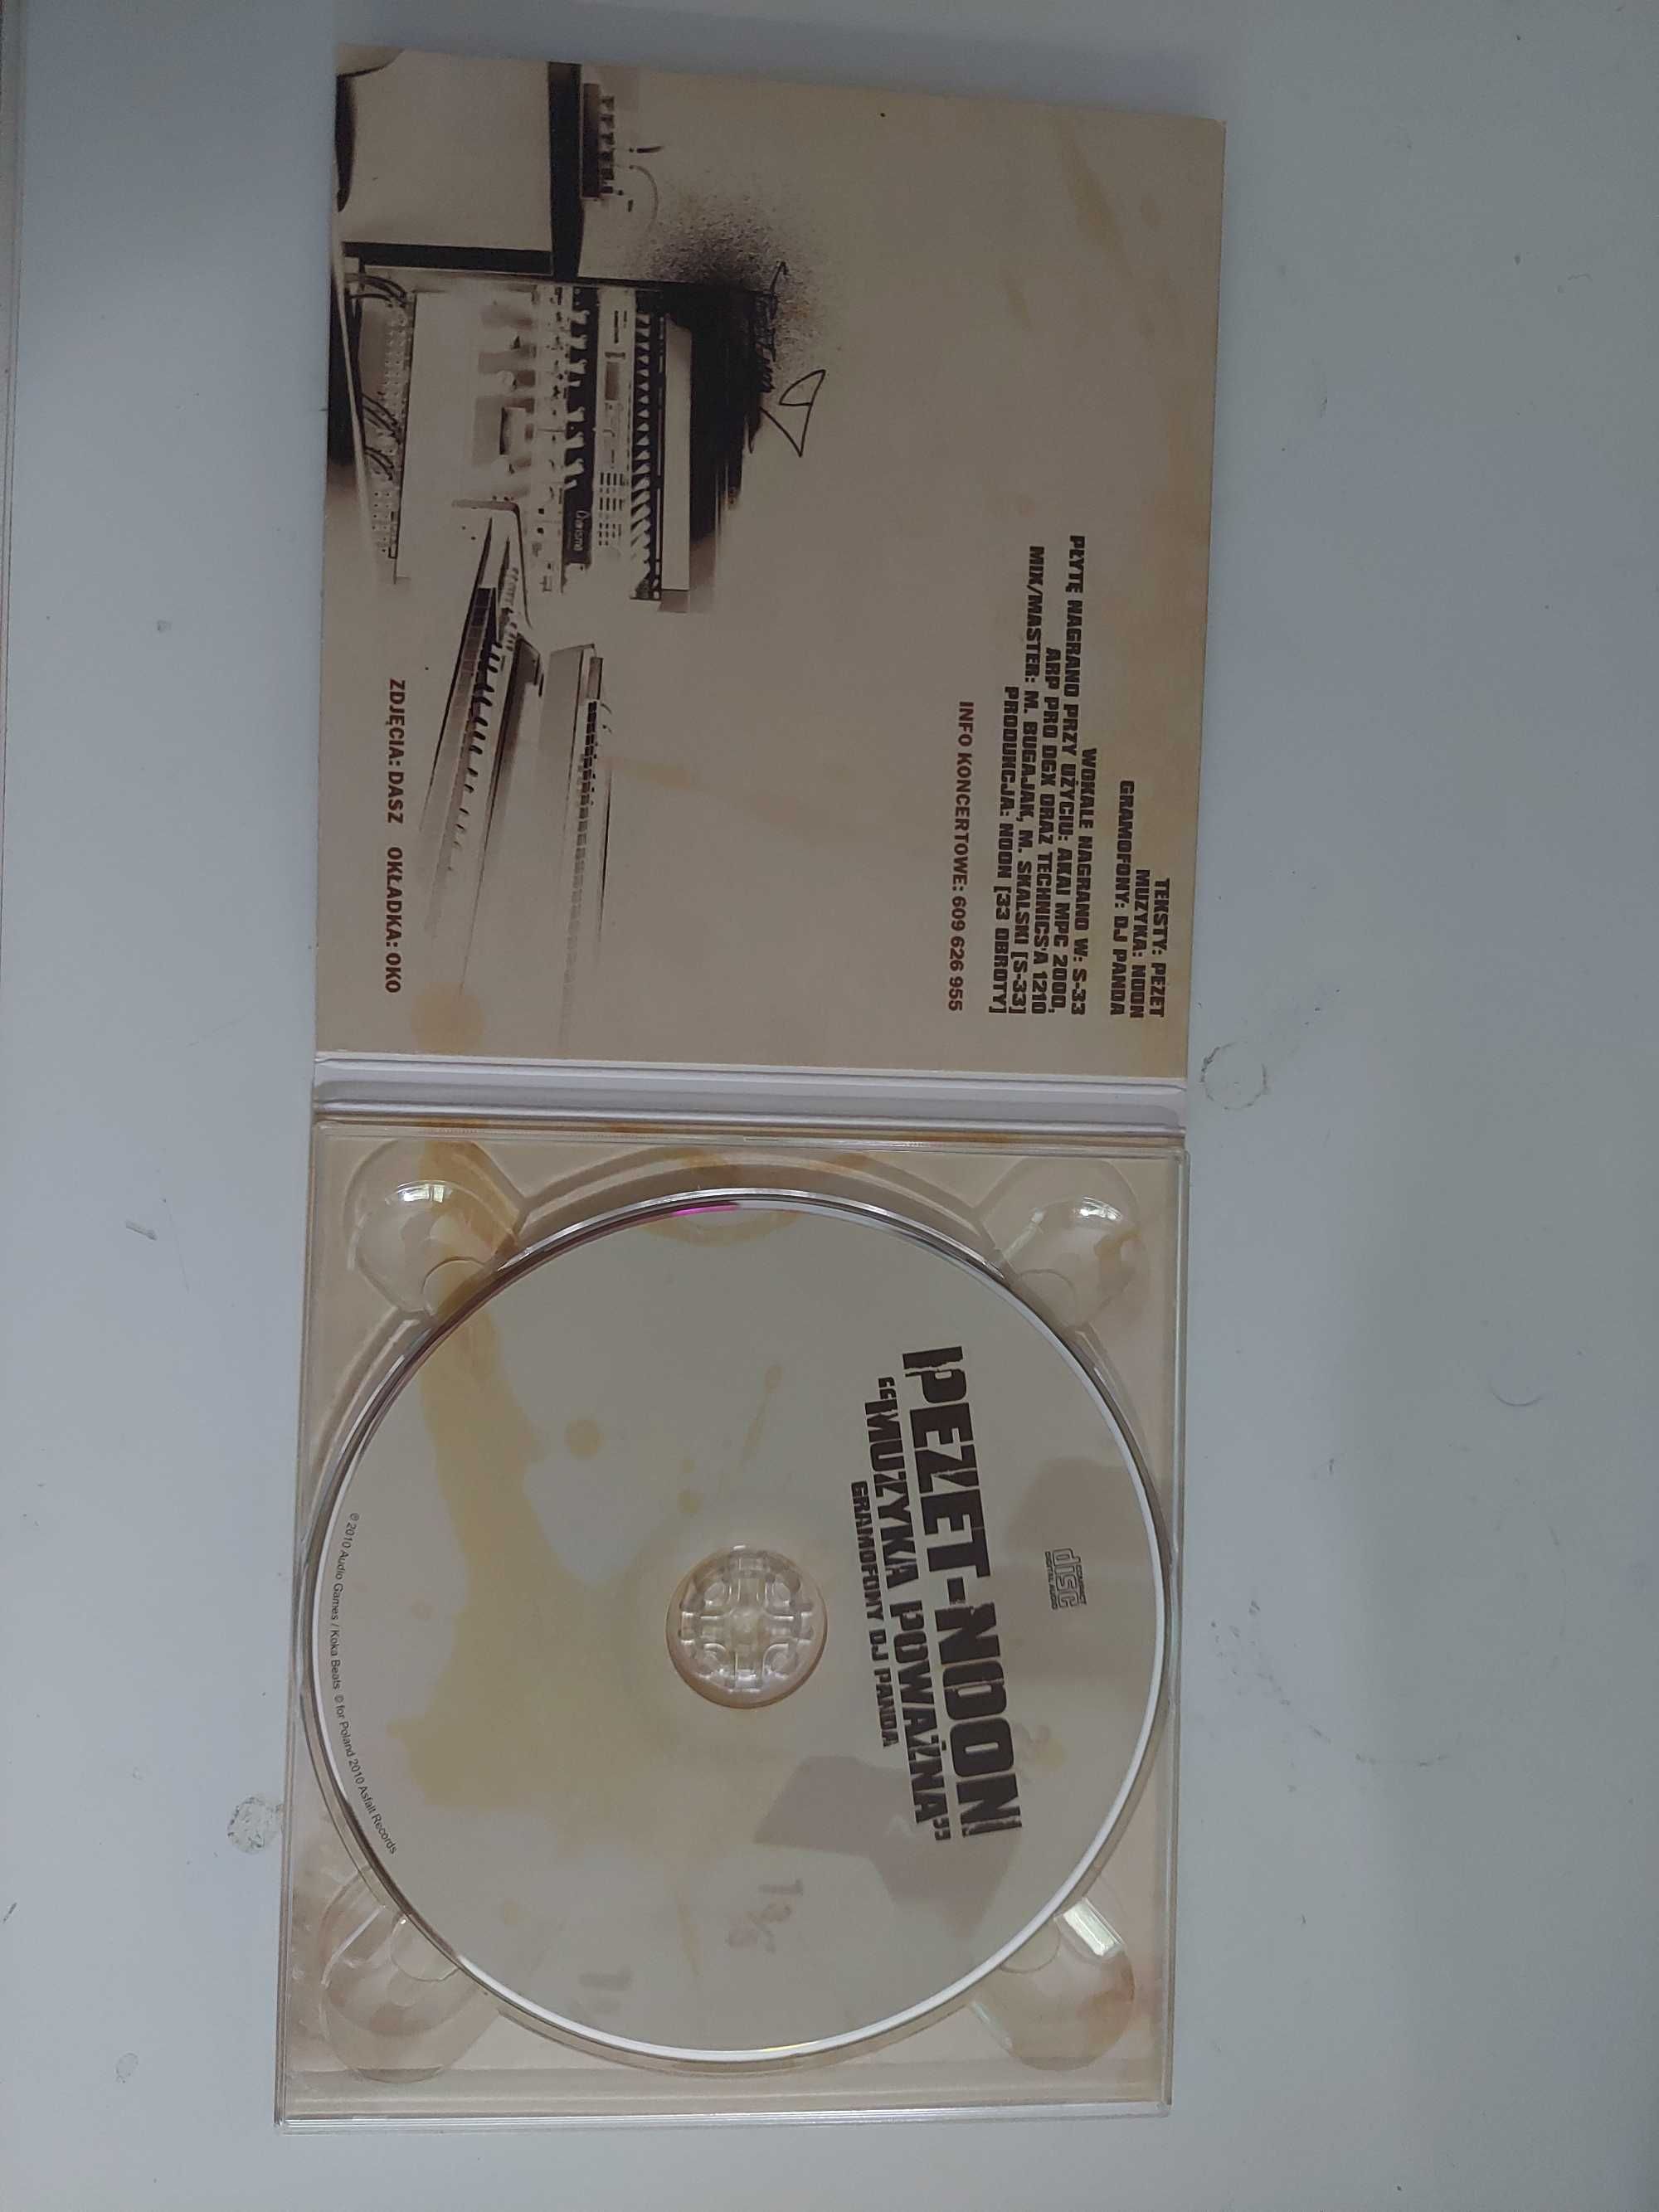 Pezet Muzyka Poważna CD